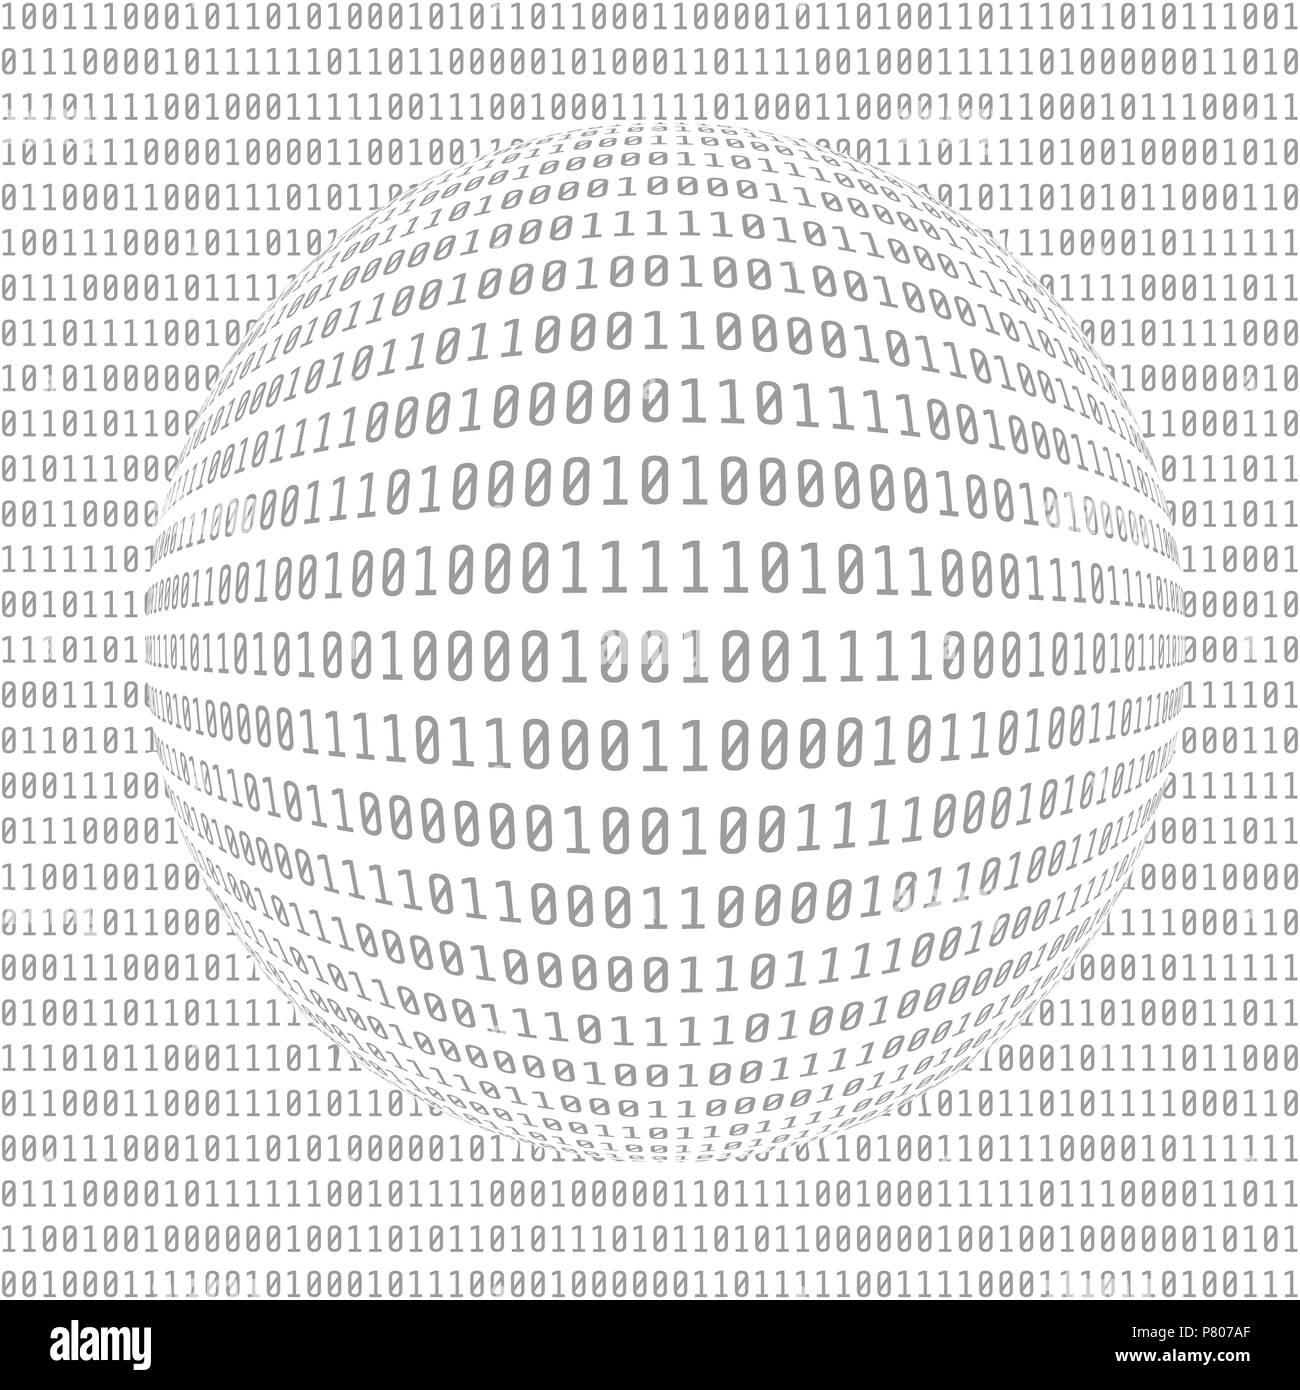 Binäre Computer Code. Digitale Daten. Abstrakte Matrix Hintergrund. Hacker-Konzept. Vector Illustration Stock Vektor